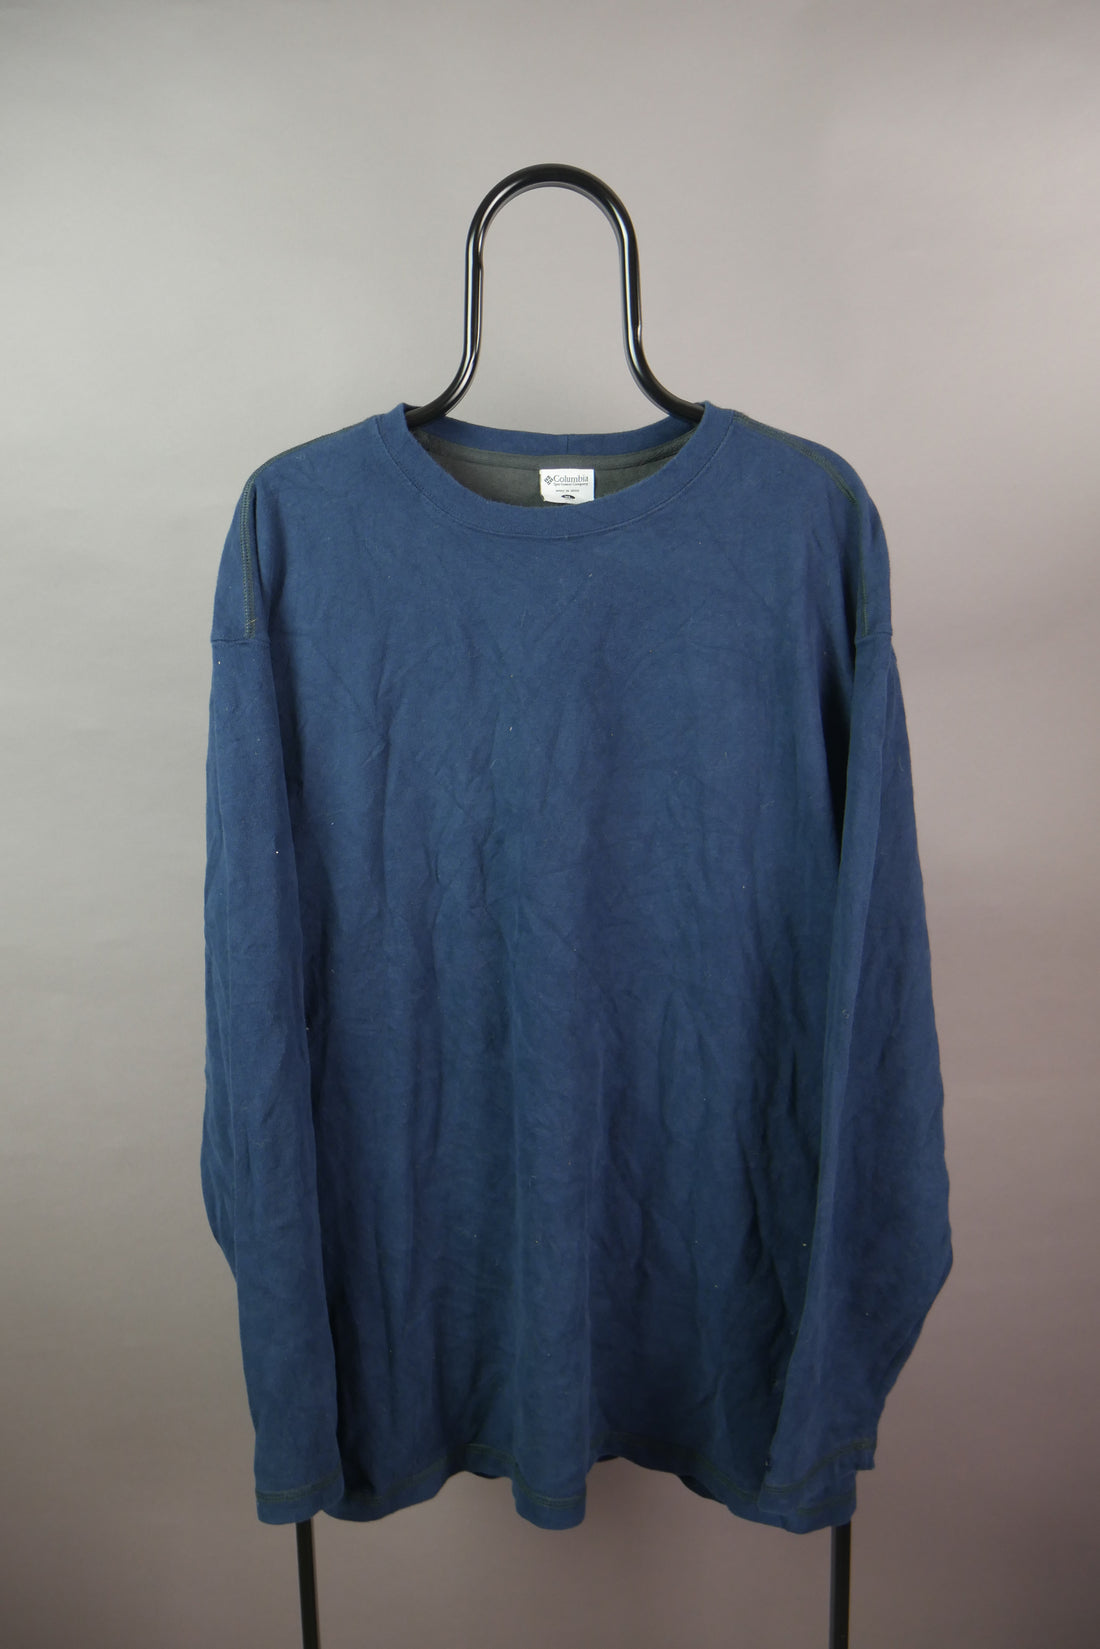 The Columbia Sweatshirt (XL)